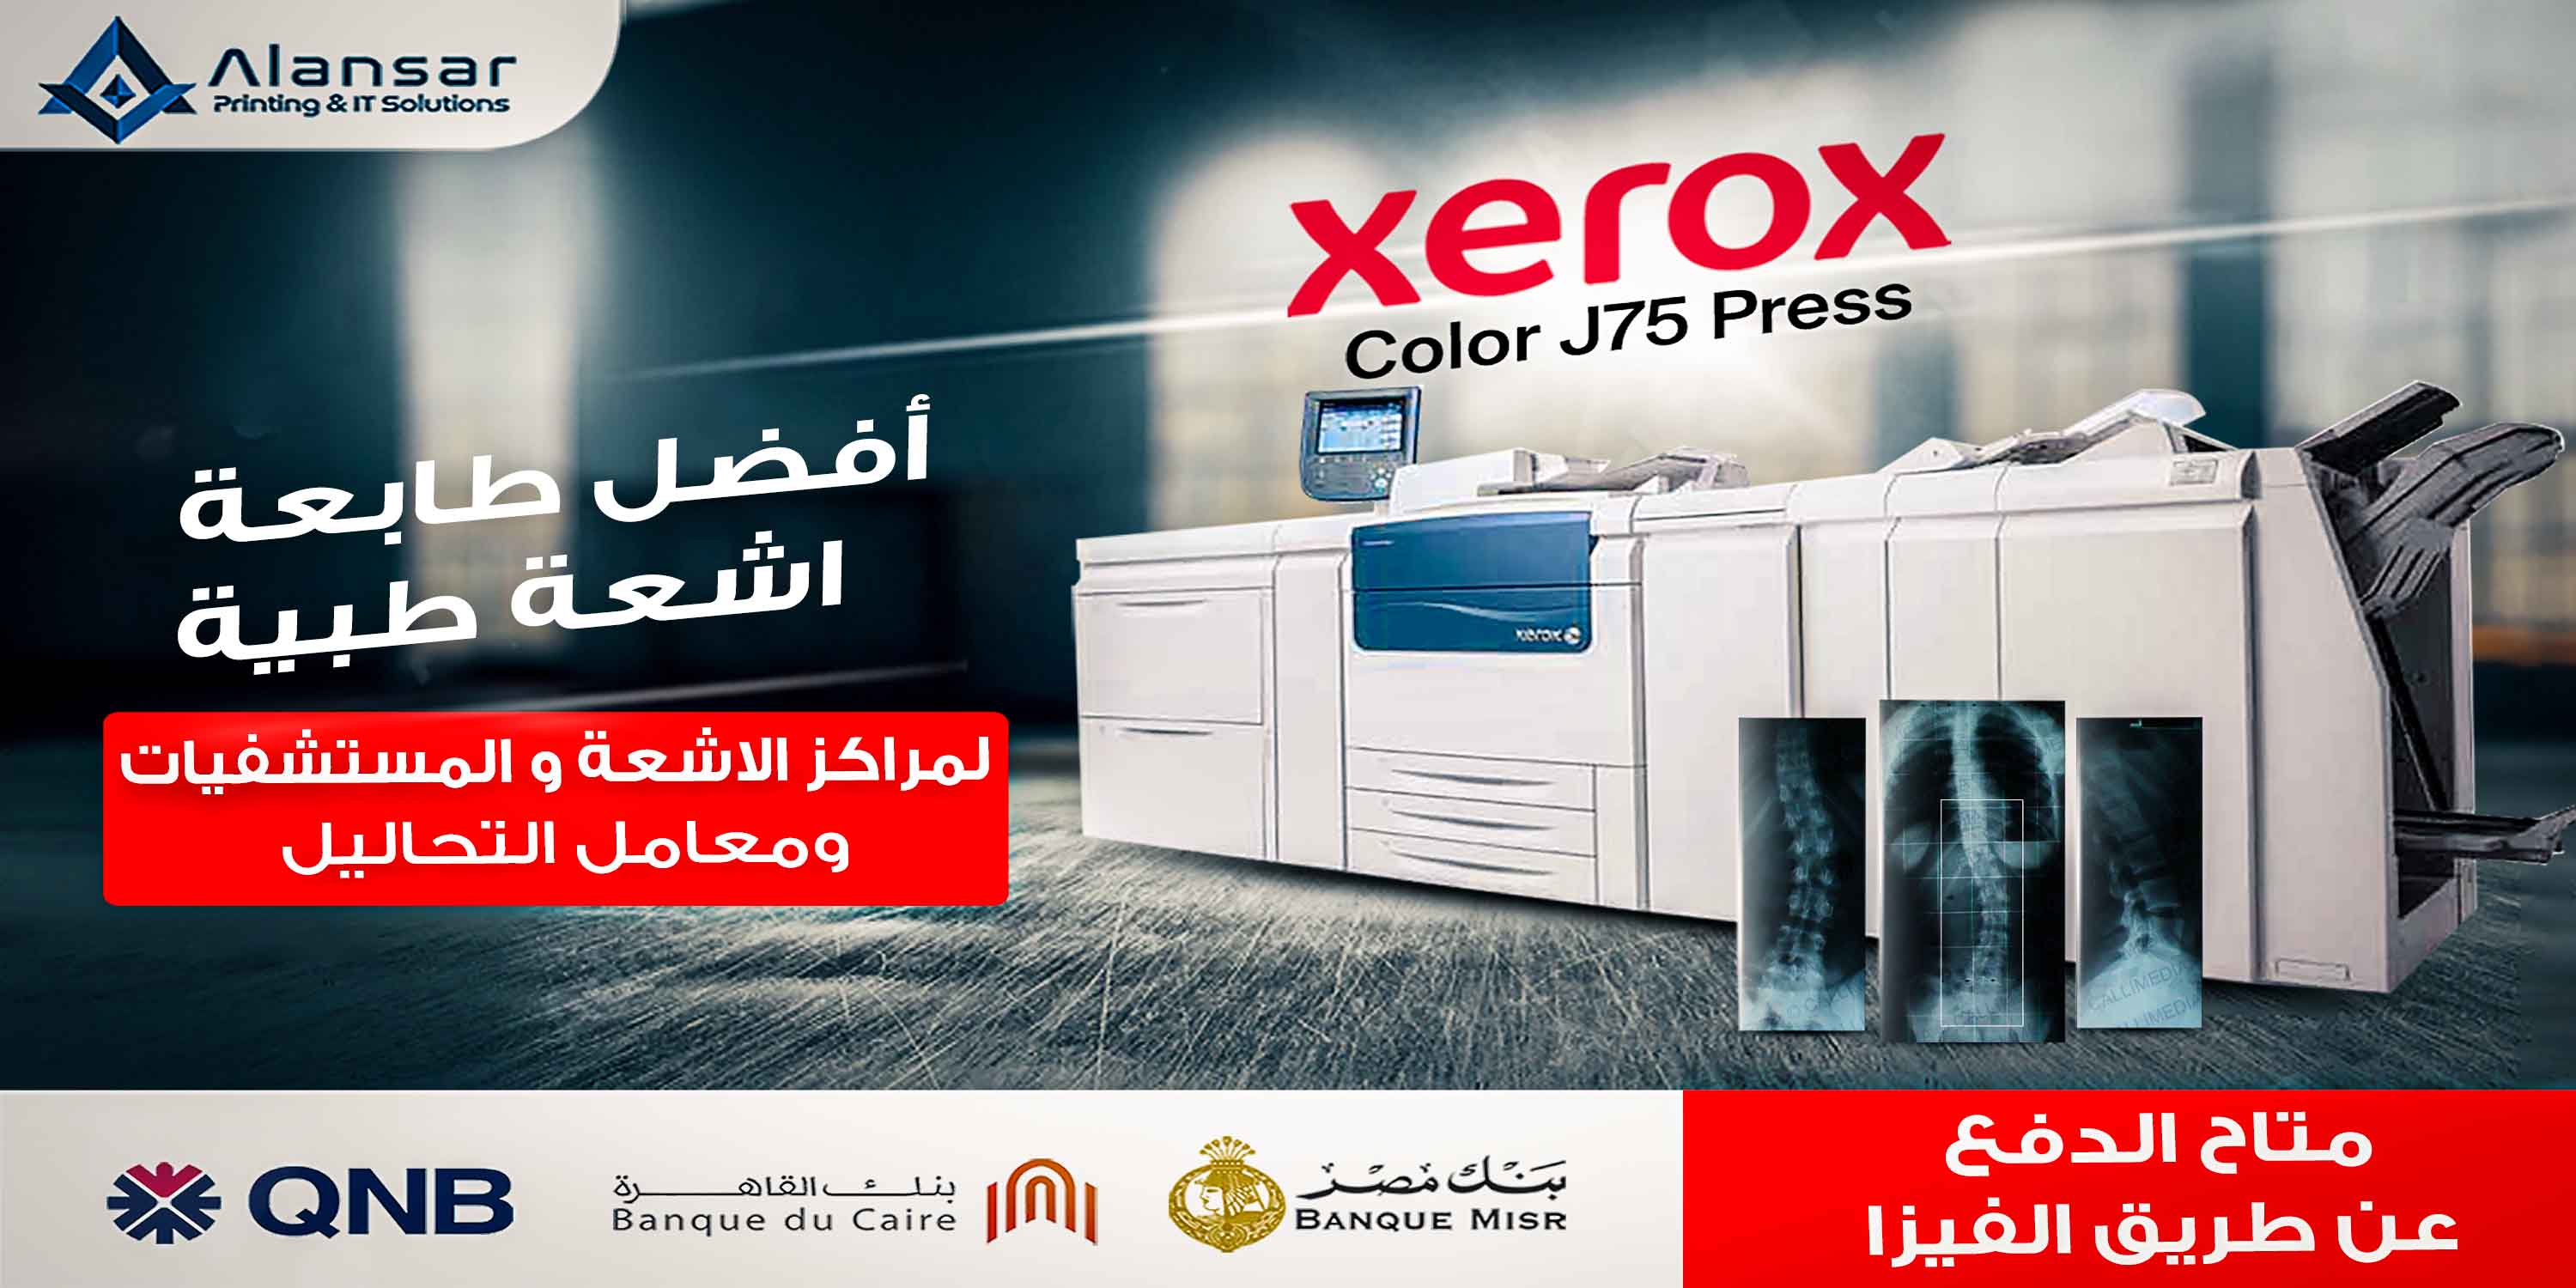 Xerox J75: The best medical radiology printer